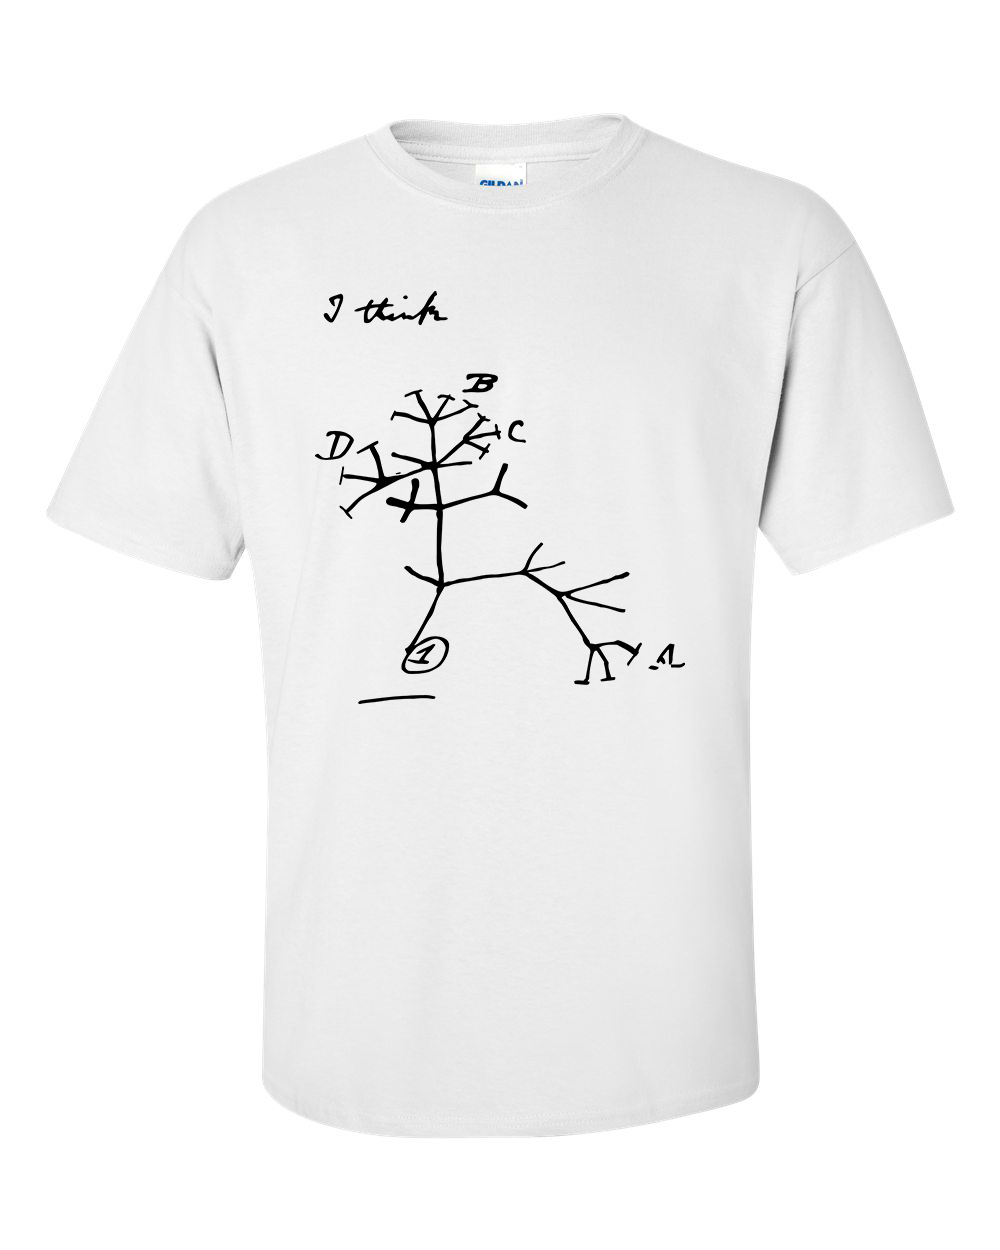 Darwin's Tree Of Life, "I Think", Evolution T-Shirt